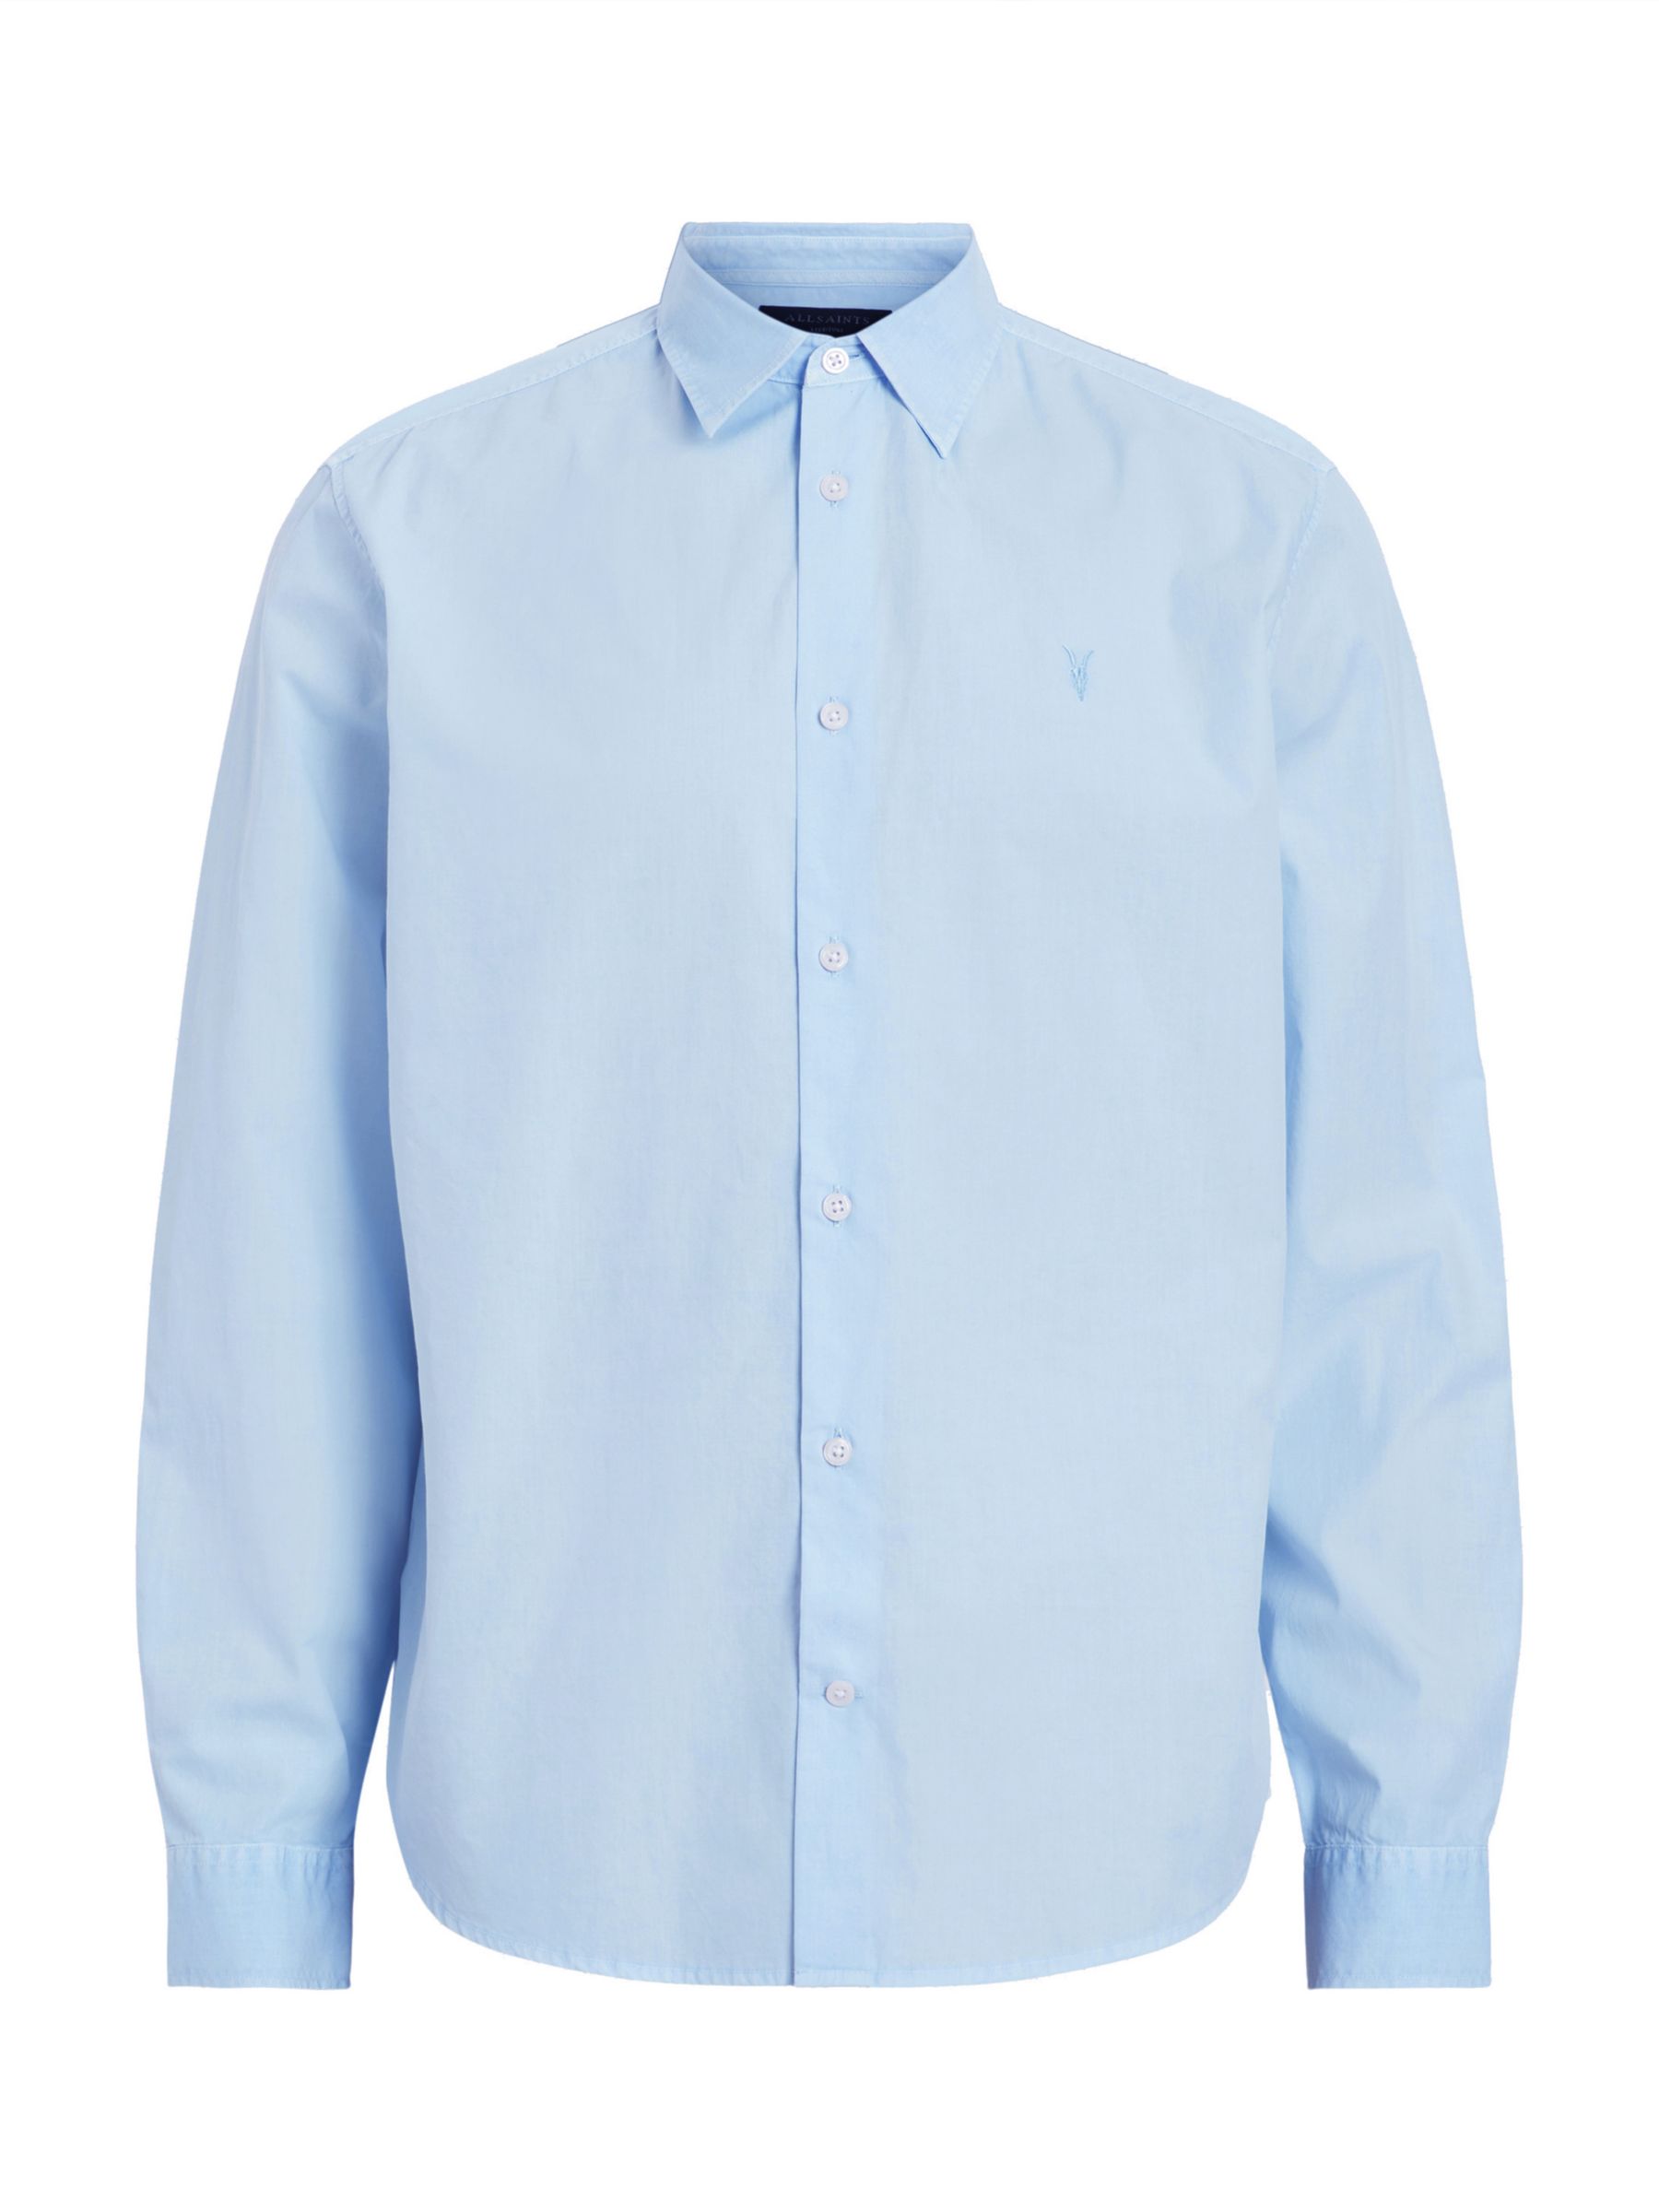 AllSaints Tahoe Long Sleeve Cotton Shirt, Bethel Blue, XS